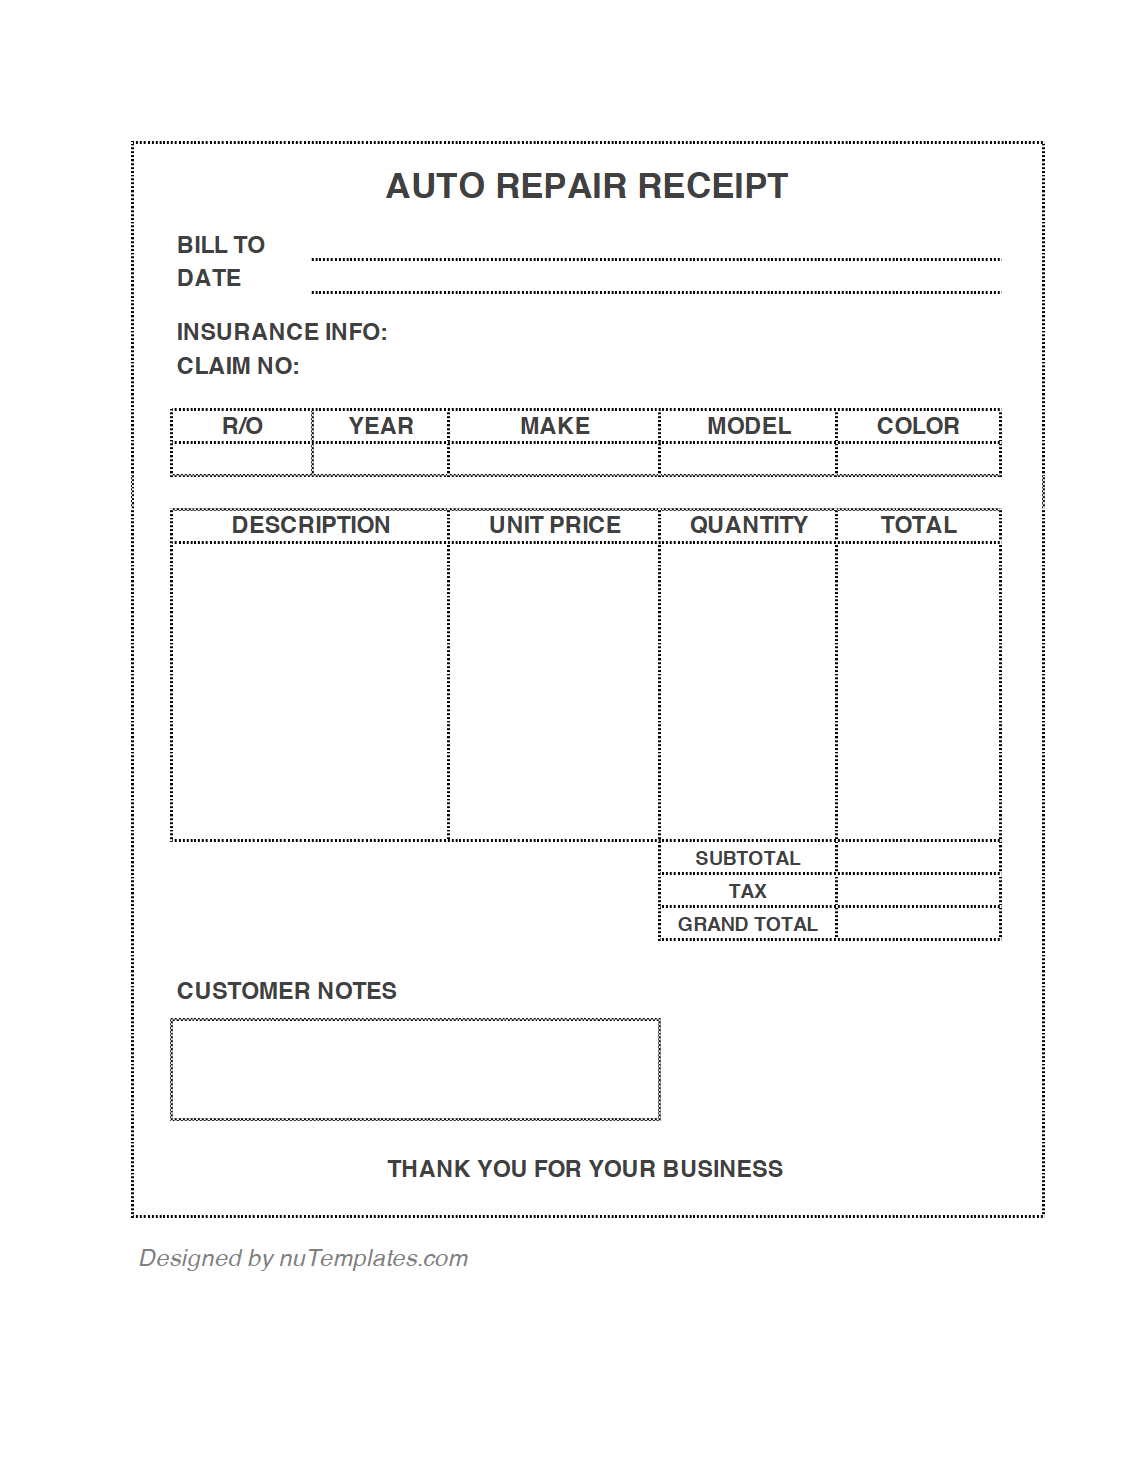 auto-repair-receipt-template-auto-repair-receipts-nutemplates